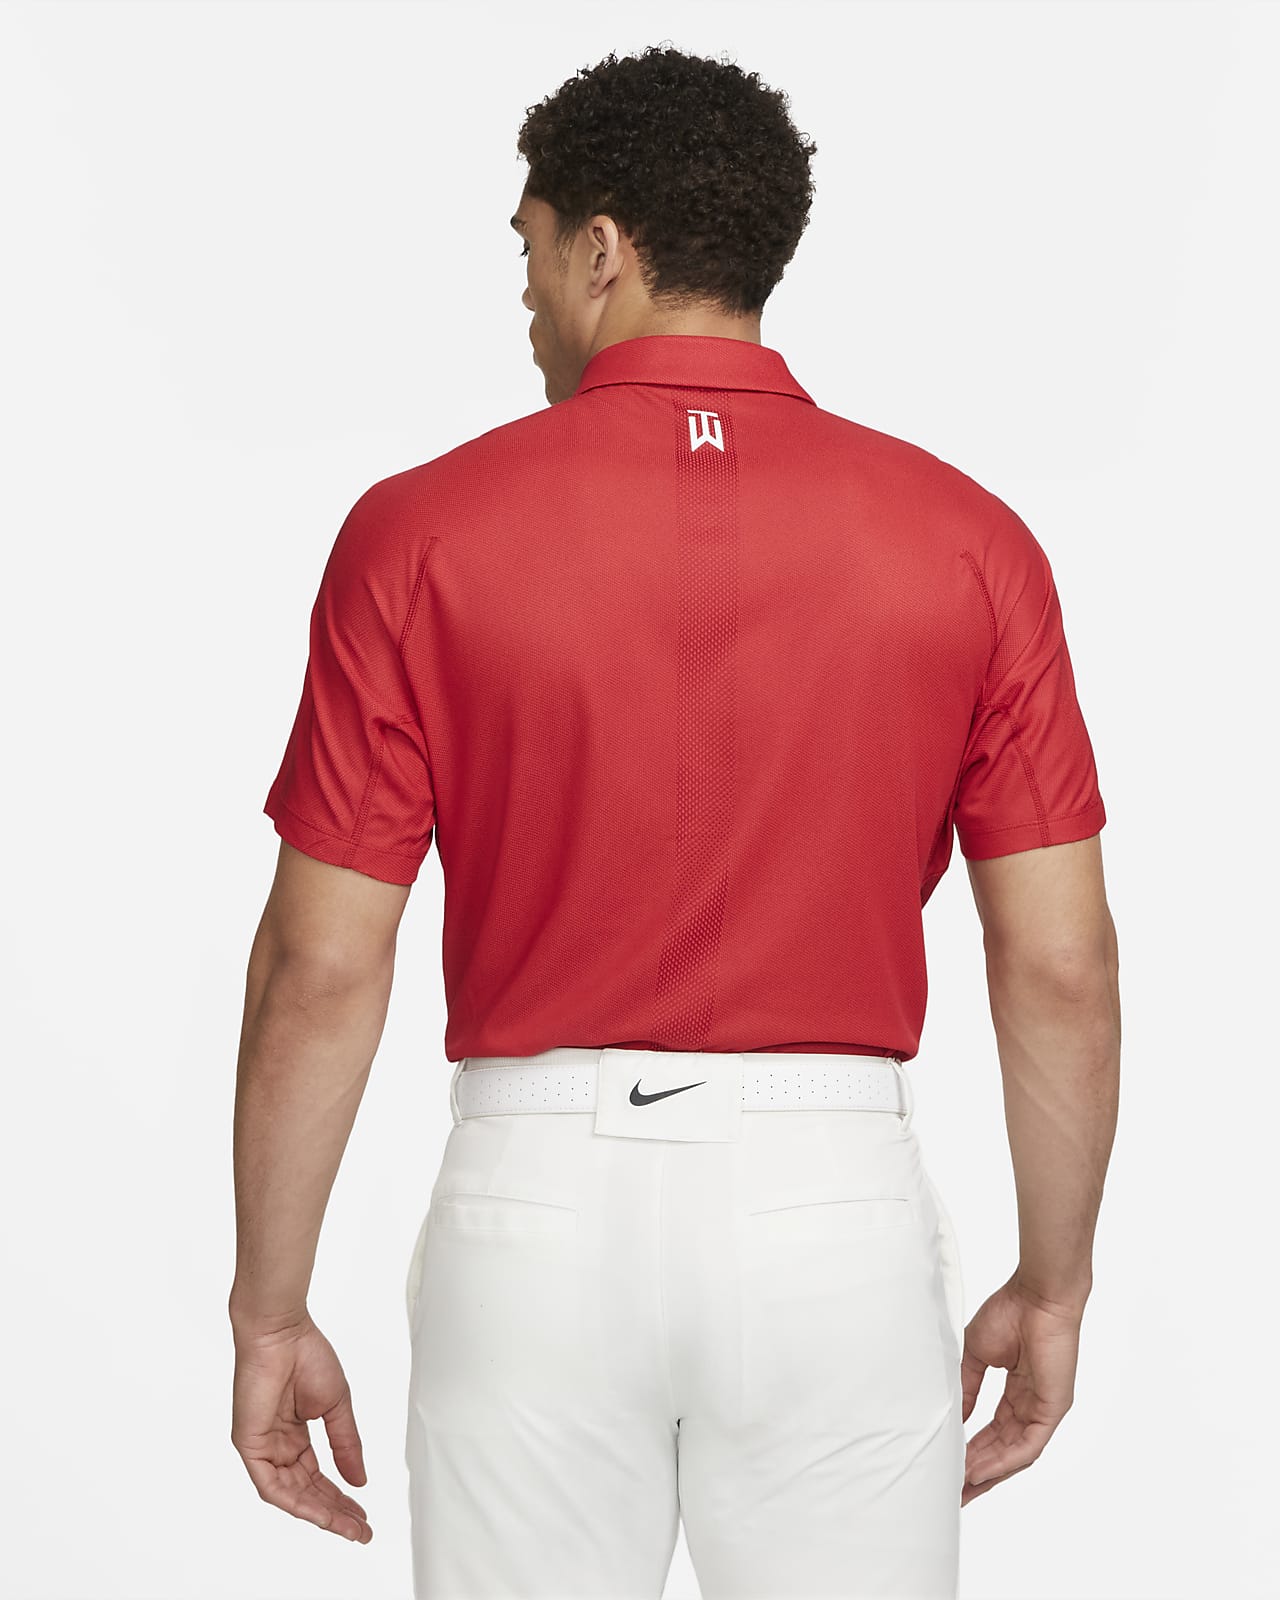 Nike Dri-FIT ADV Tiger Woods Men's Golf Polo